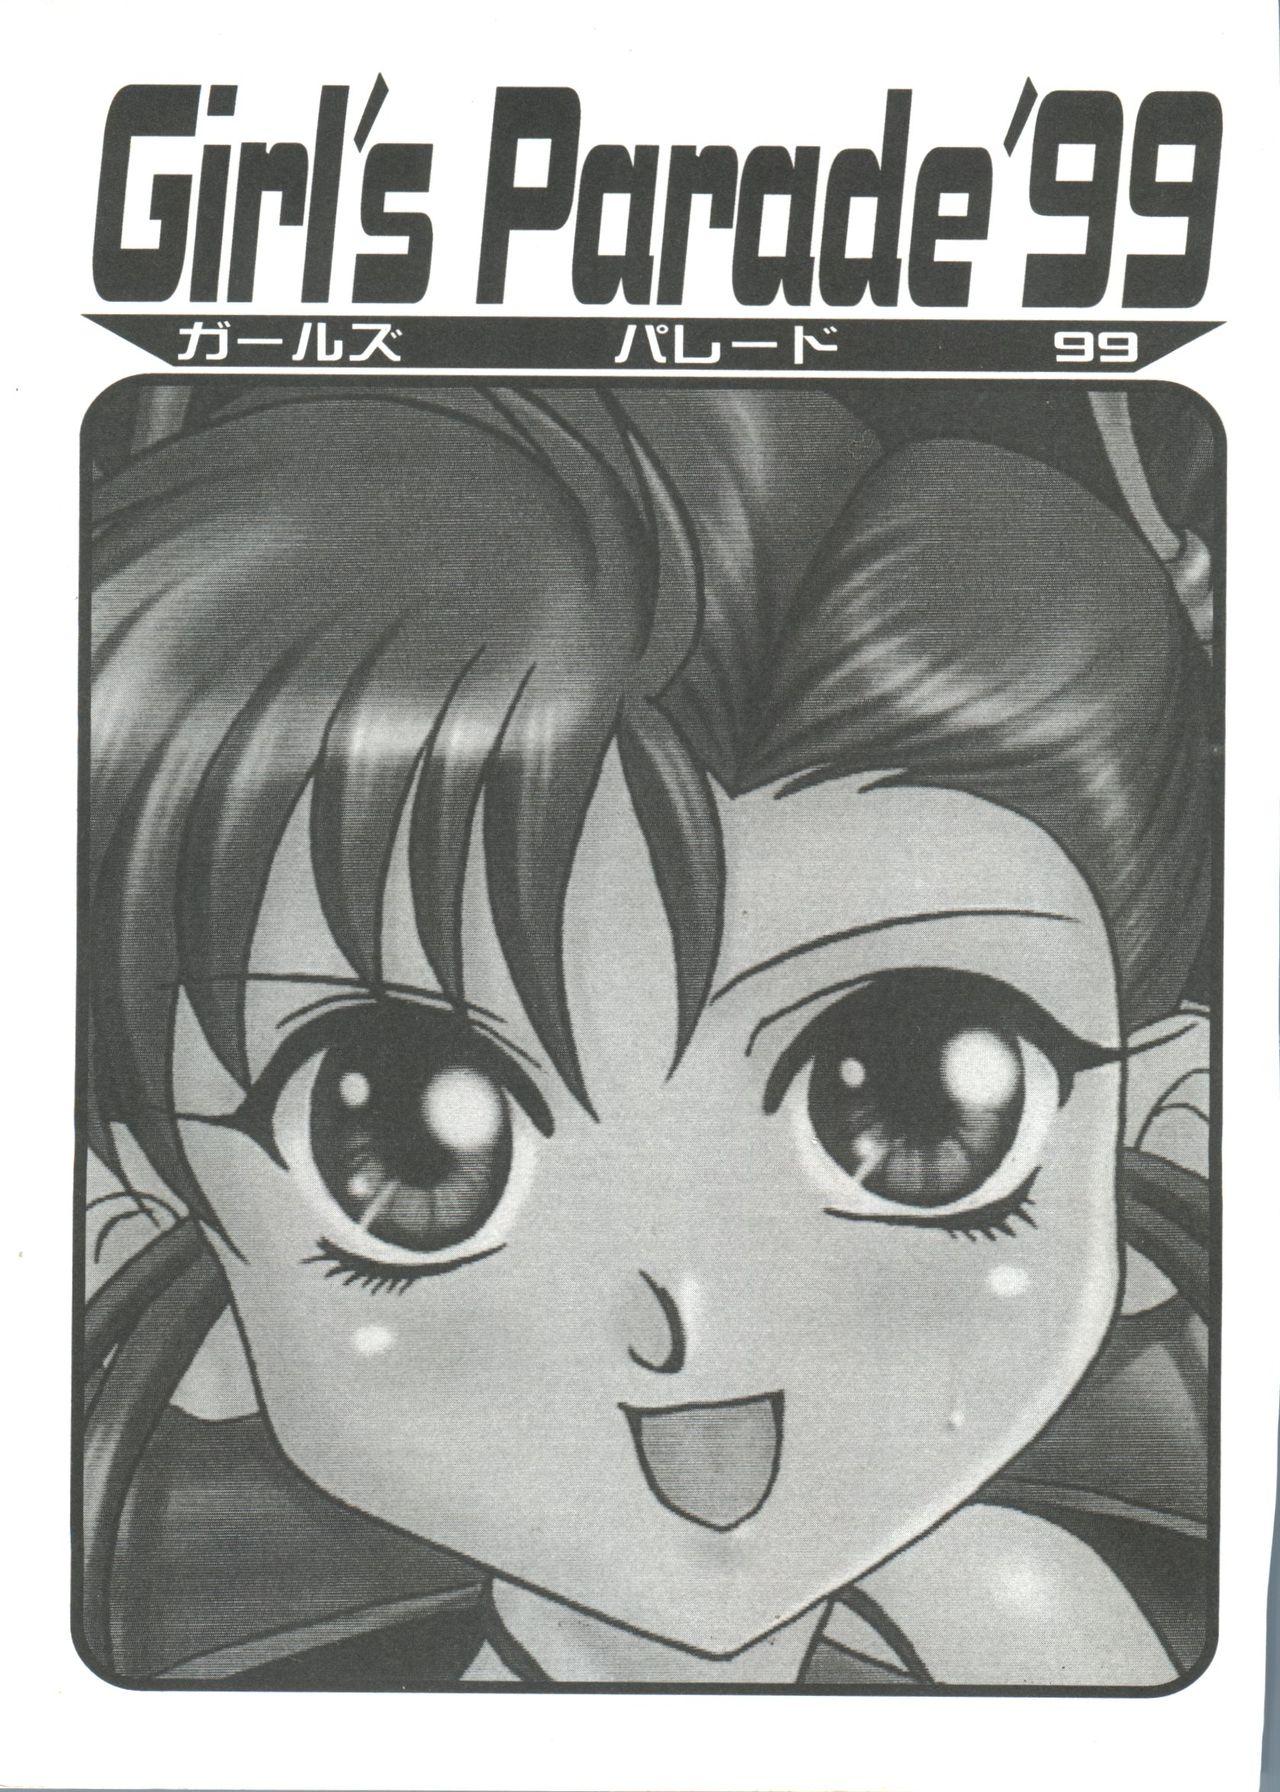 Bigboobs Girl's Parade 99 Cut 10 - Ah my goddess Tenchi muyo Bakusou kyoudai lets and go Fun fun pharmacy Messy - Page 3